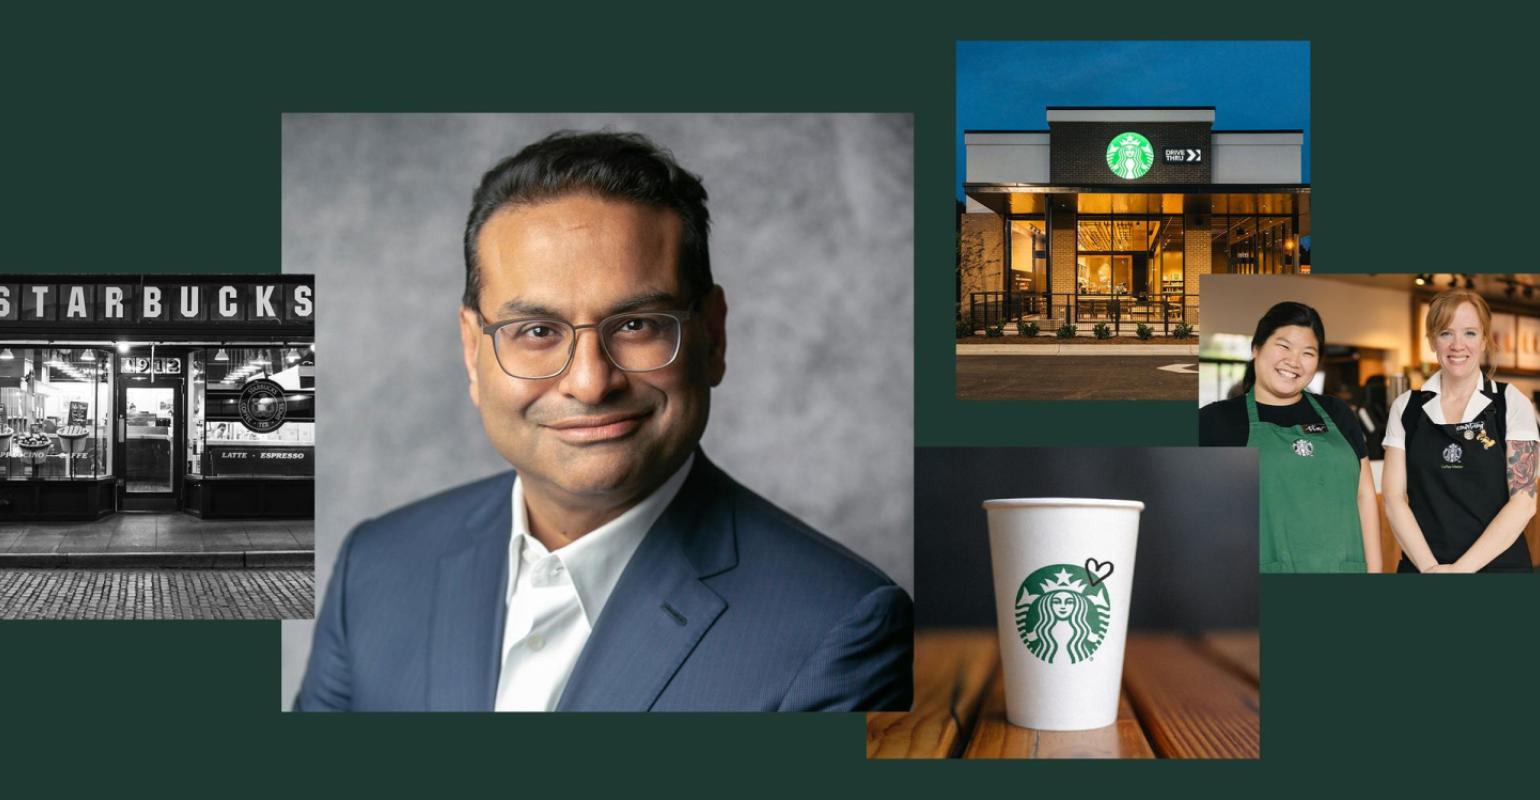 https://www.nrn.com/sites/nrn.com/files/styles/article_featured_retina/public/Starbucks-new-CEO.jpeg?itok=fq8Atppn